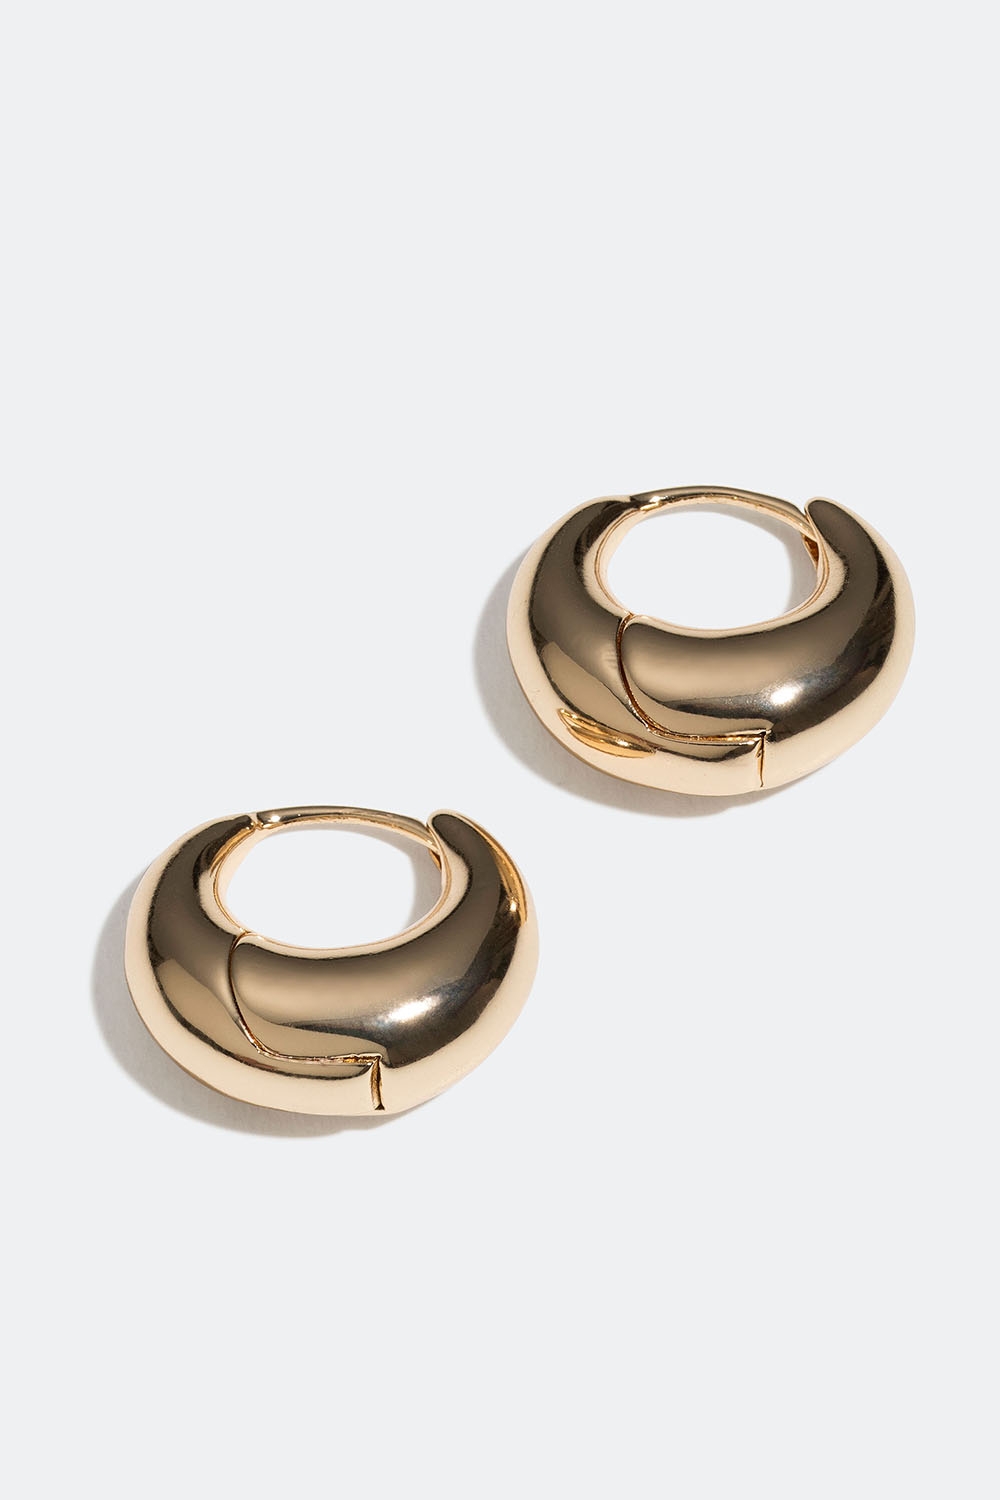 Små guldfarvede hoops i et chunky design i gruppen Smykker / Øreringe / Hoops / Klassiske hoops hos Glitter (253005662002)